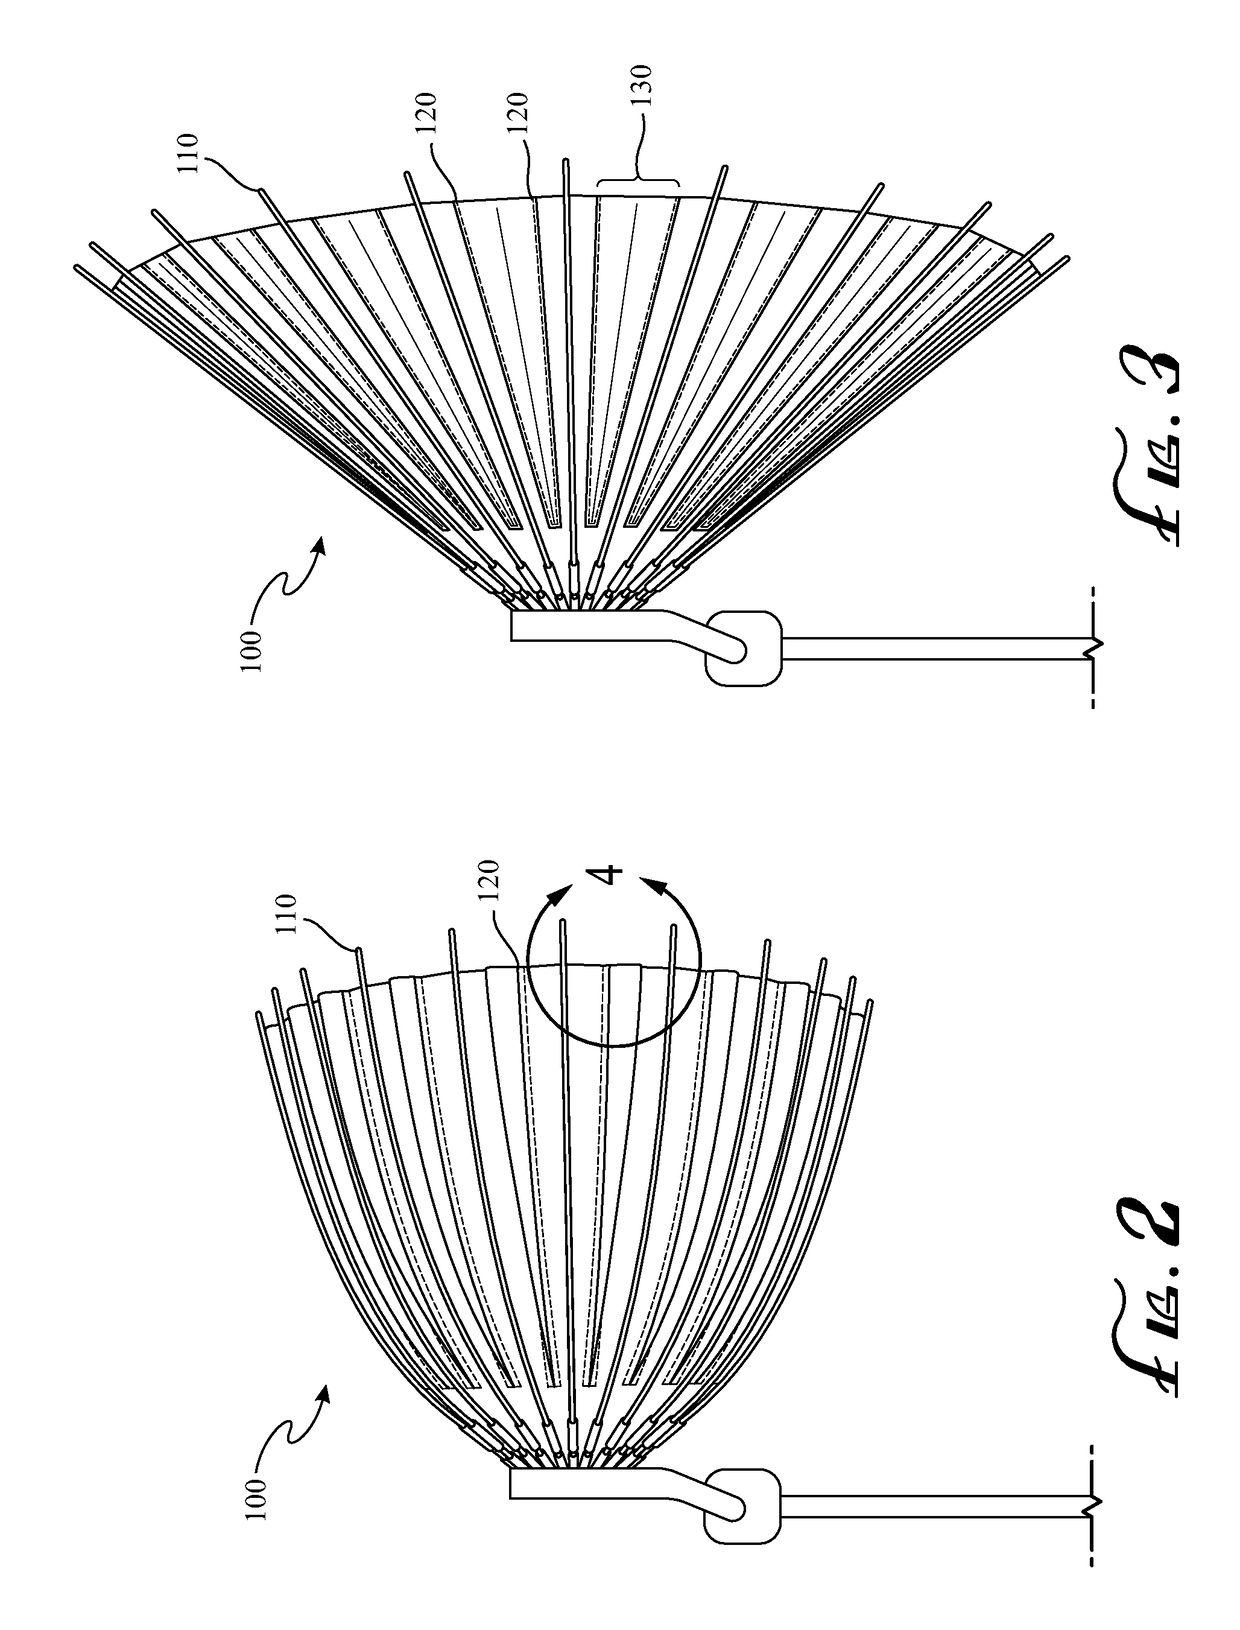 Shape Shifting Reflector Umbrella Apparatus, Systems, and Methods